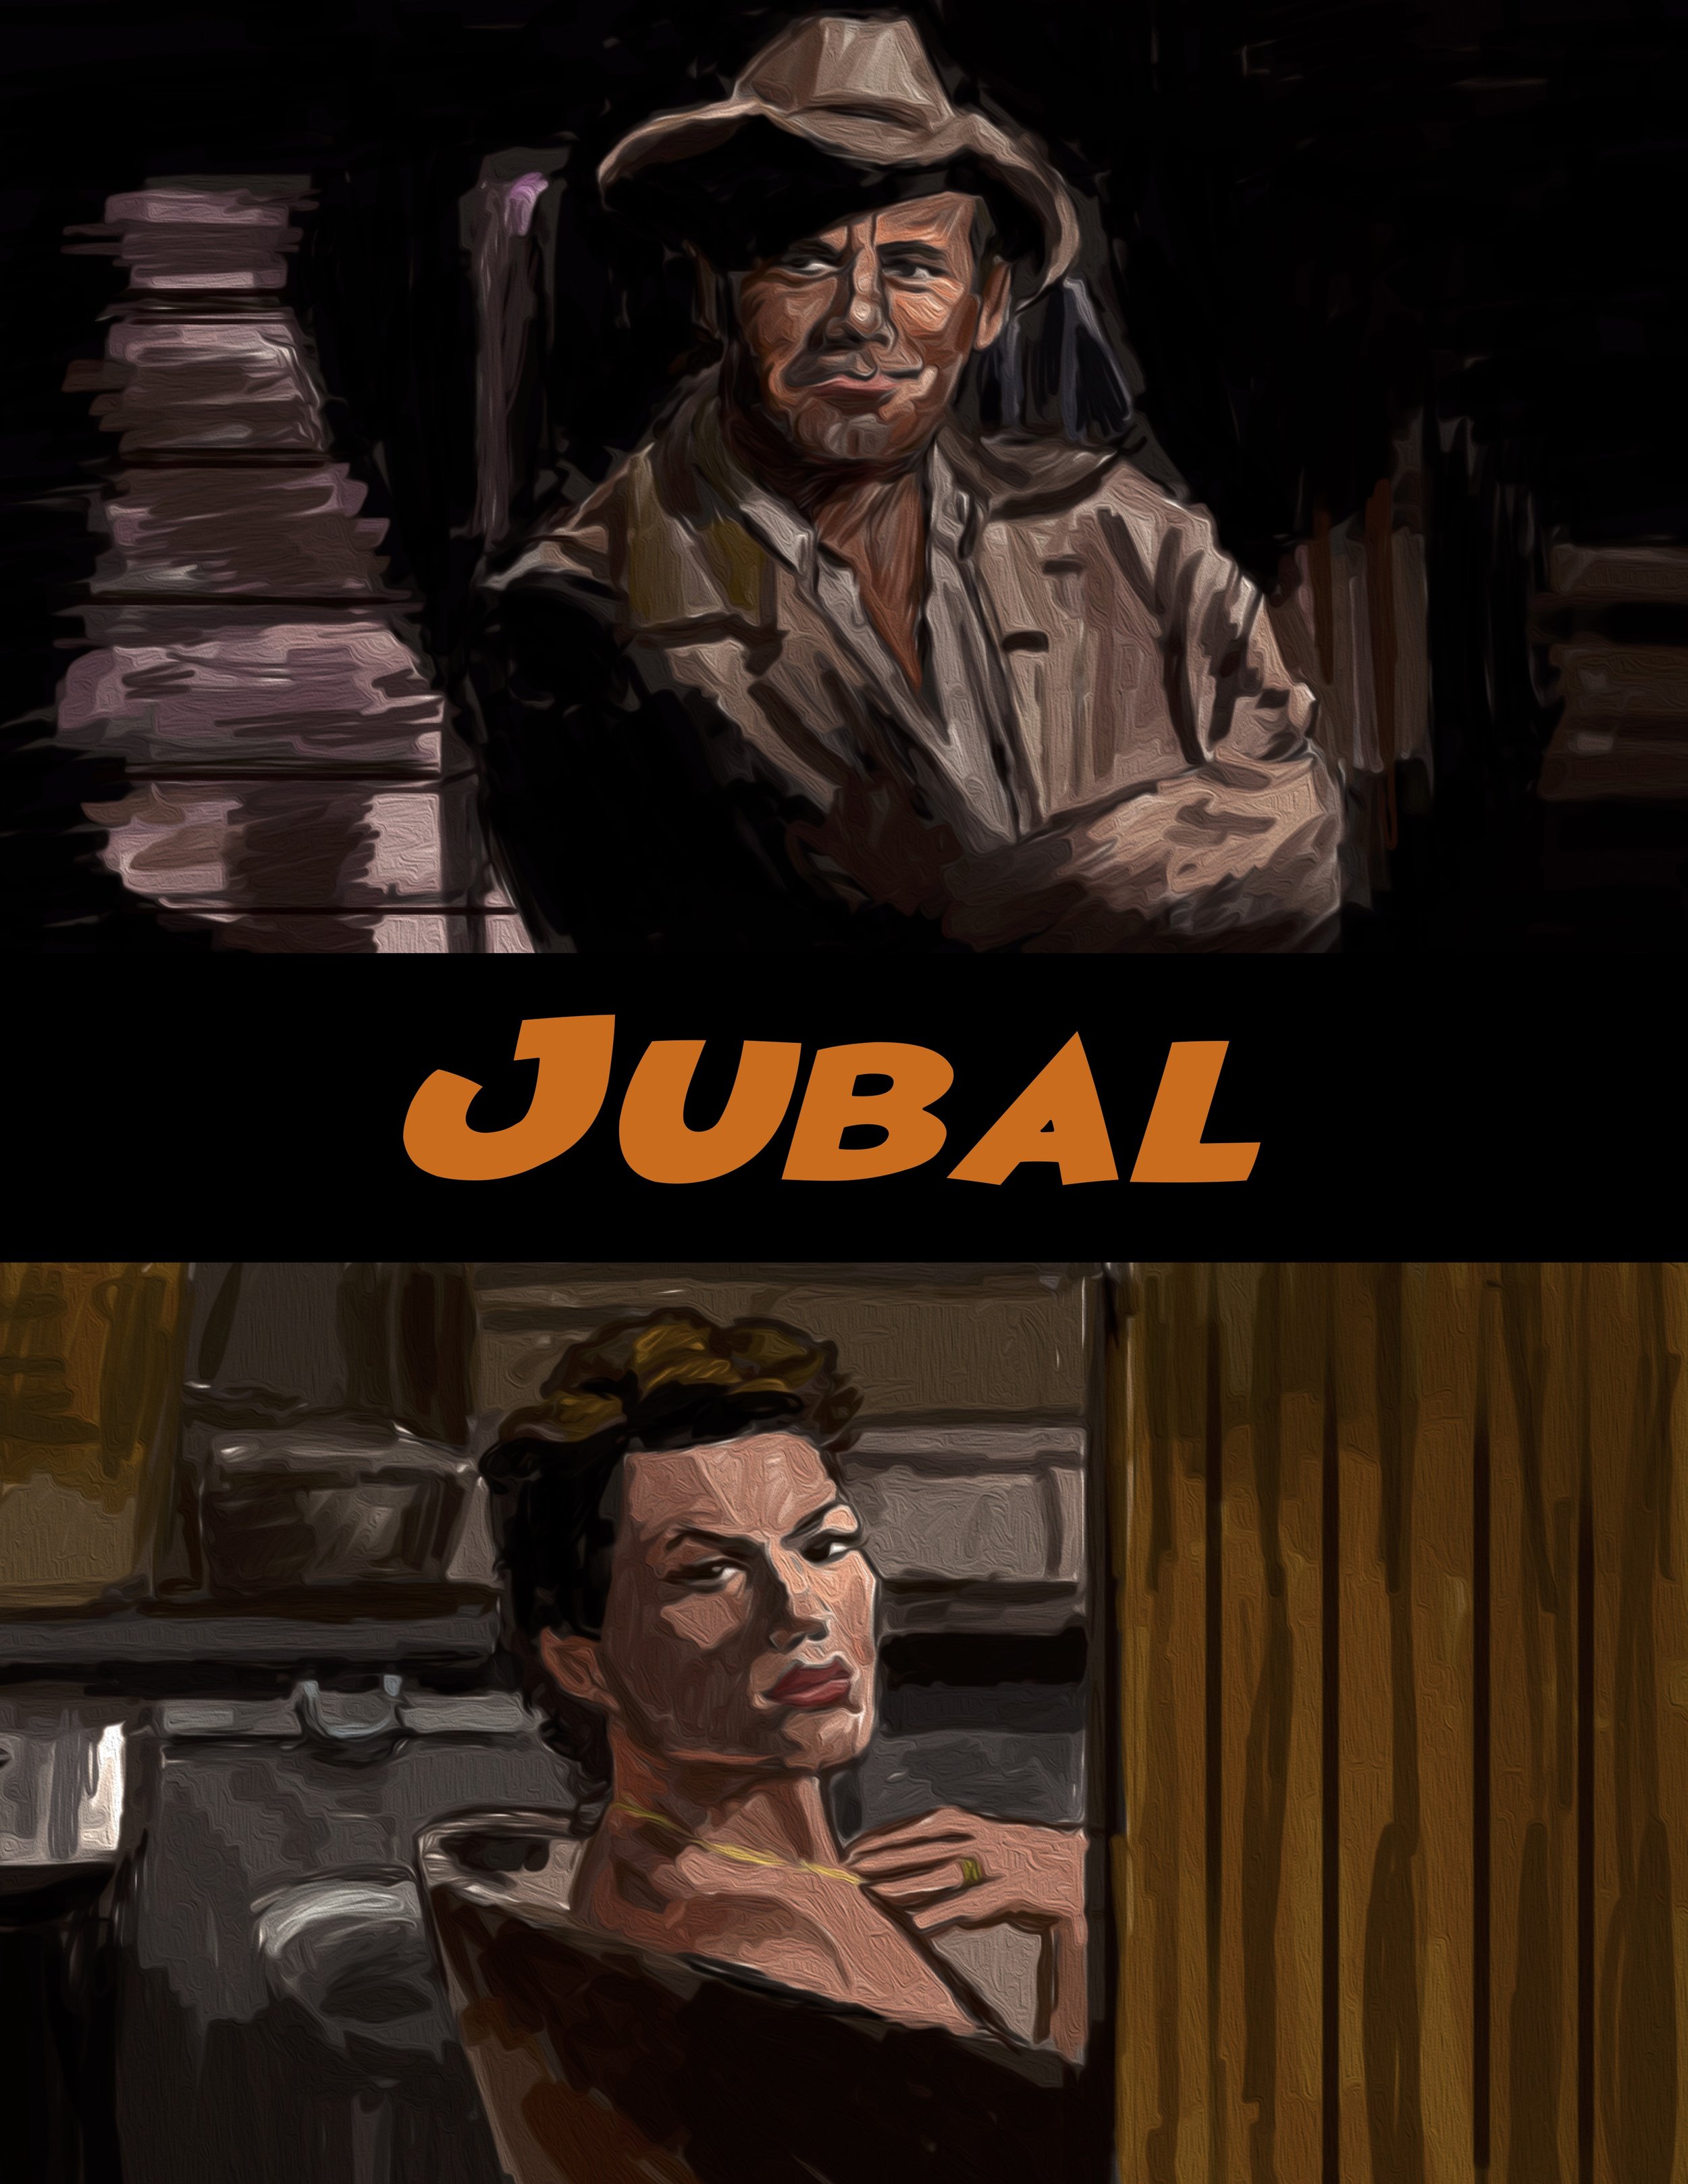 Jubal (1956)